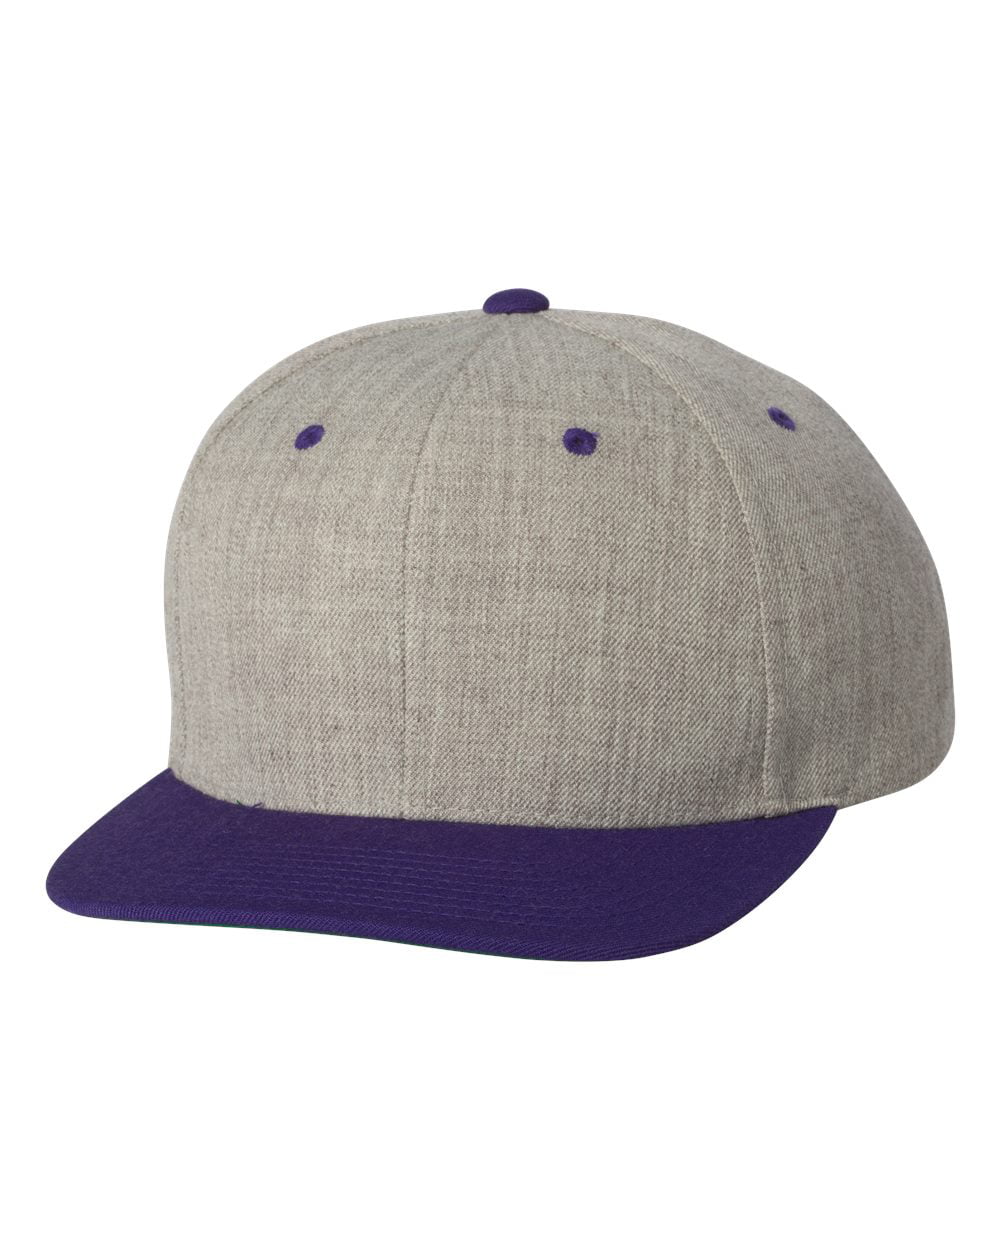 Yupoong Classic Snapback Baseball Cap Plain Blank Snap Back Hat 6089 M/T 